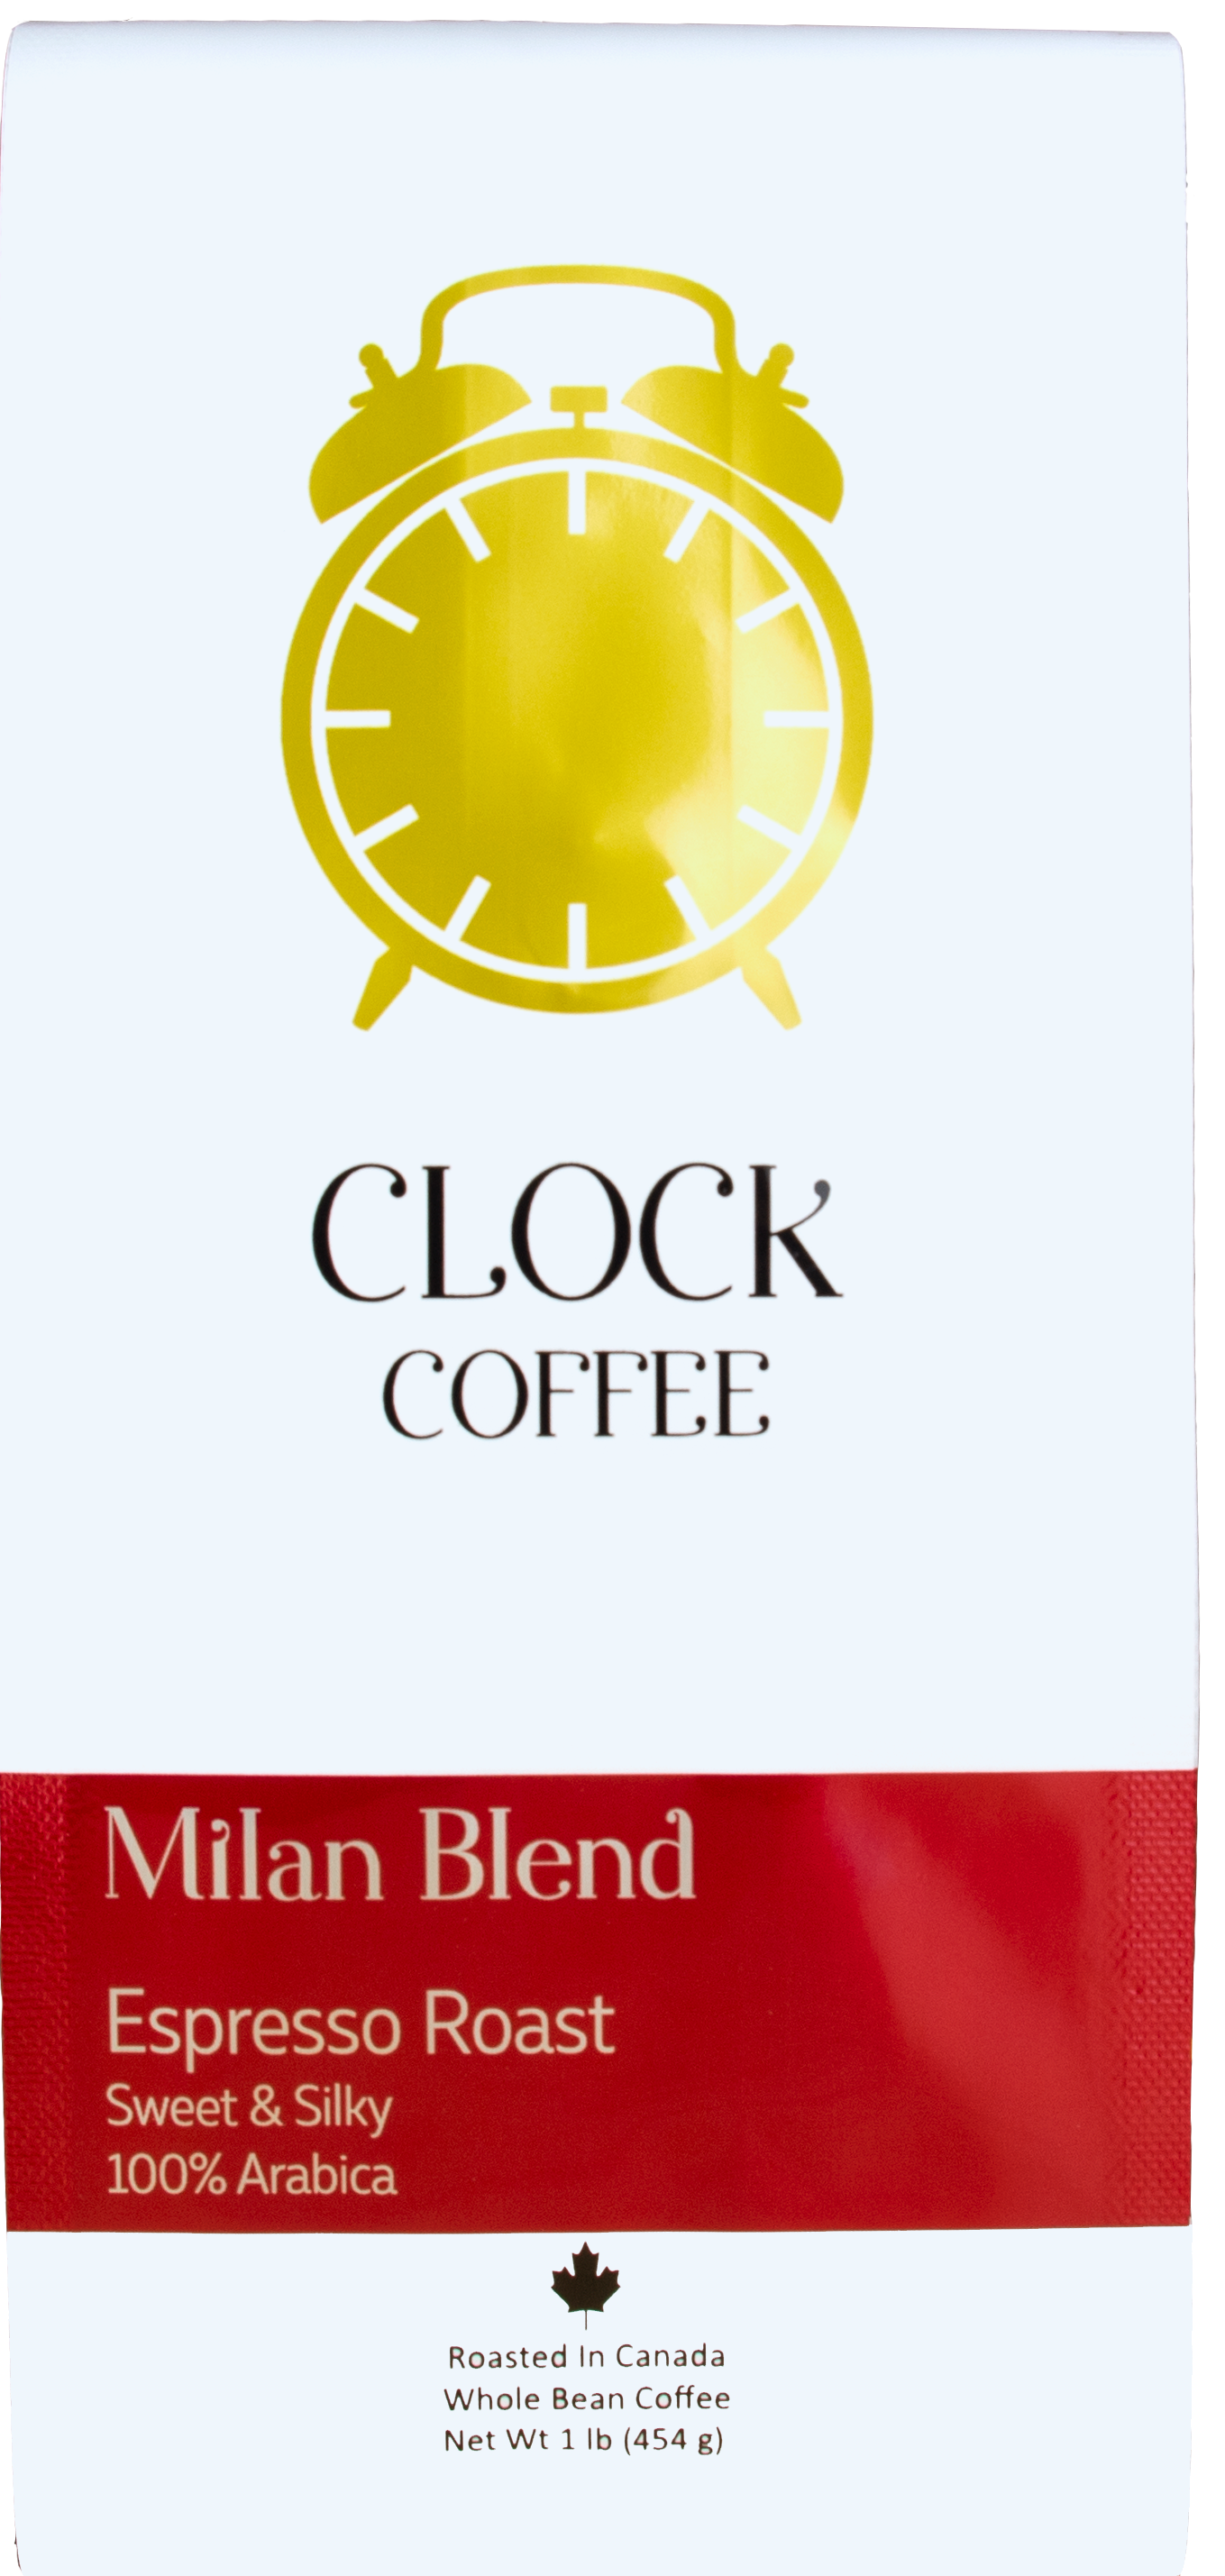 Clock Coffee, Milan Blend, Espresso Roast, Whole Bean, 100% Arabica Coffee